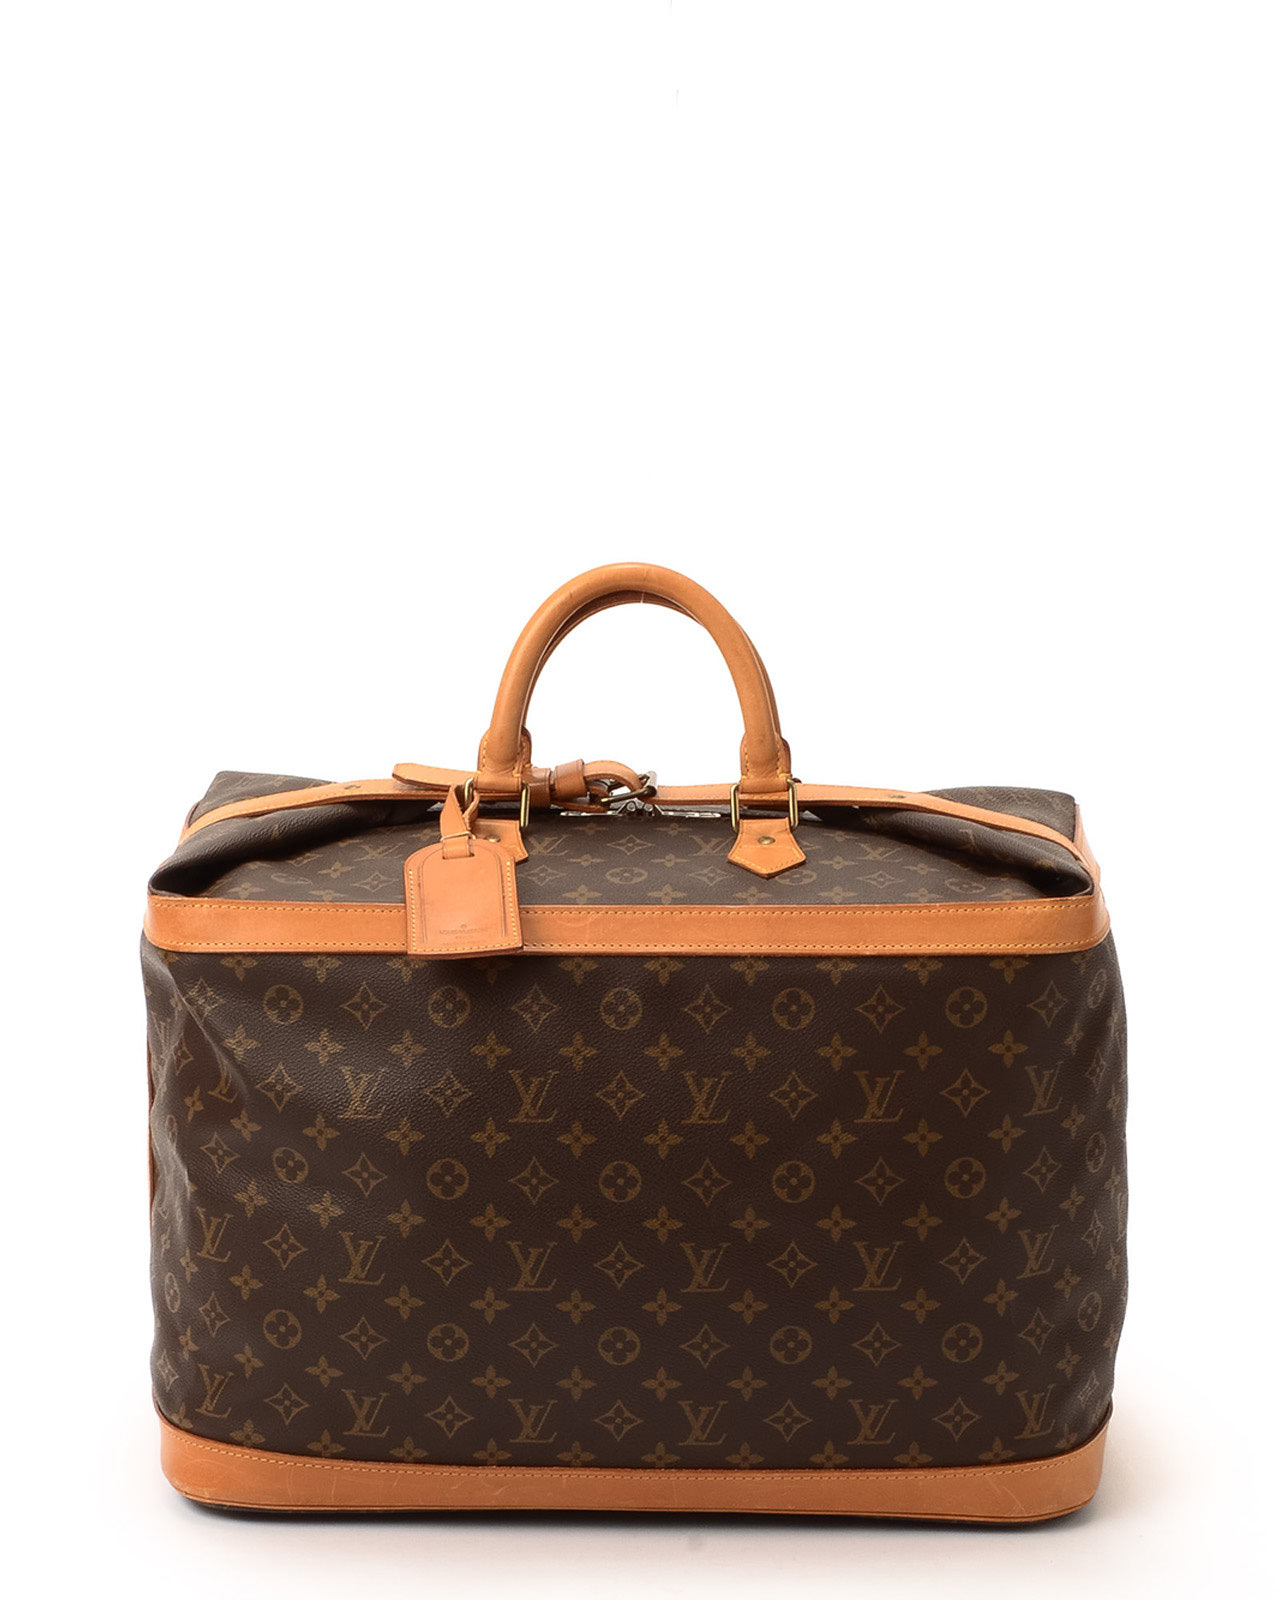 Lyst - Louis Vuitton Monogram Cruiser Bag 45 Travel Bag in Brown